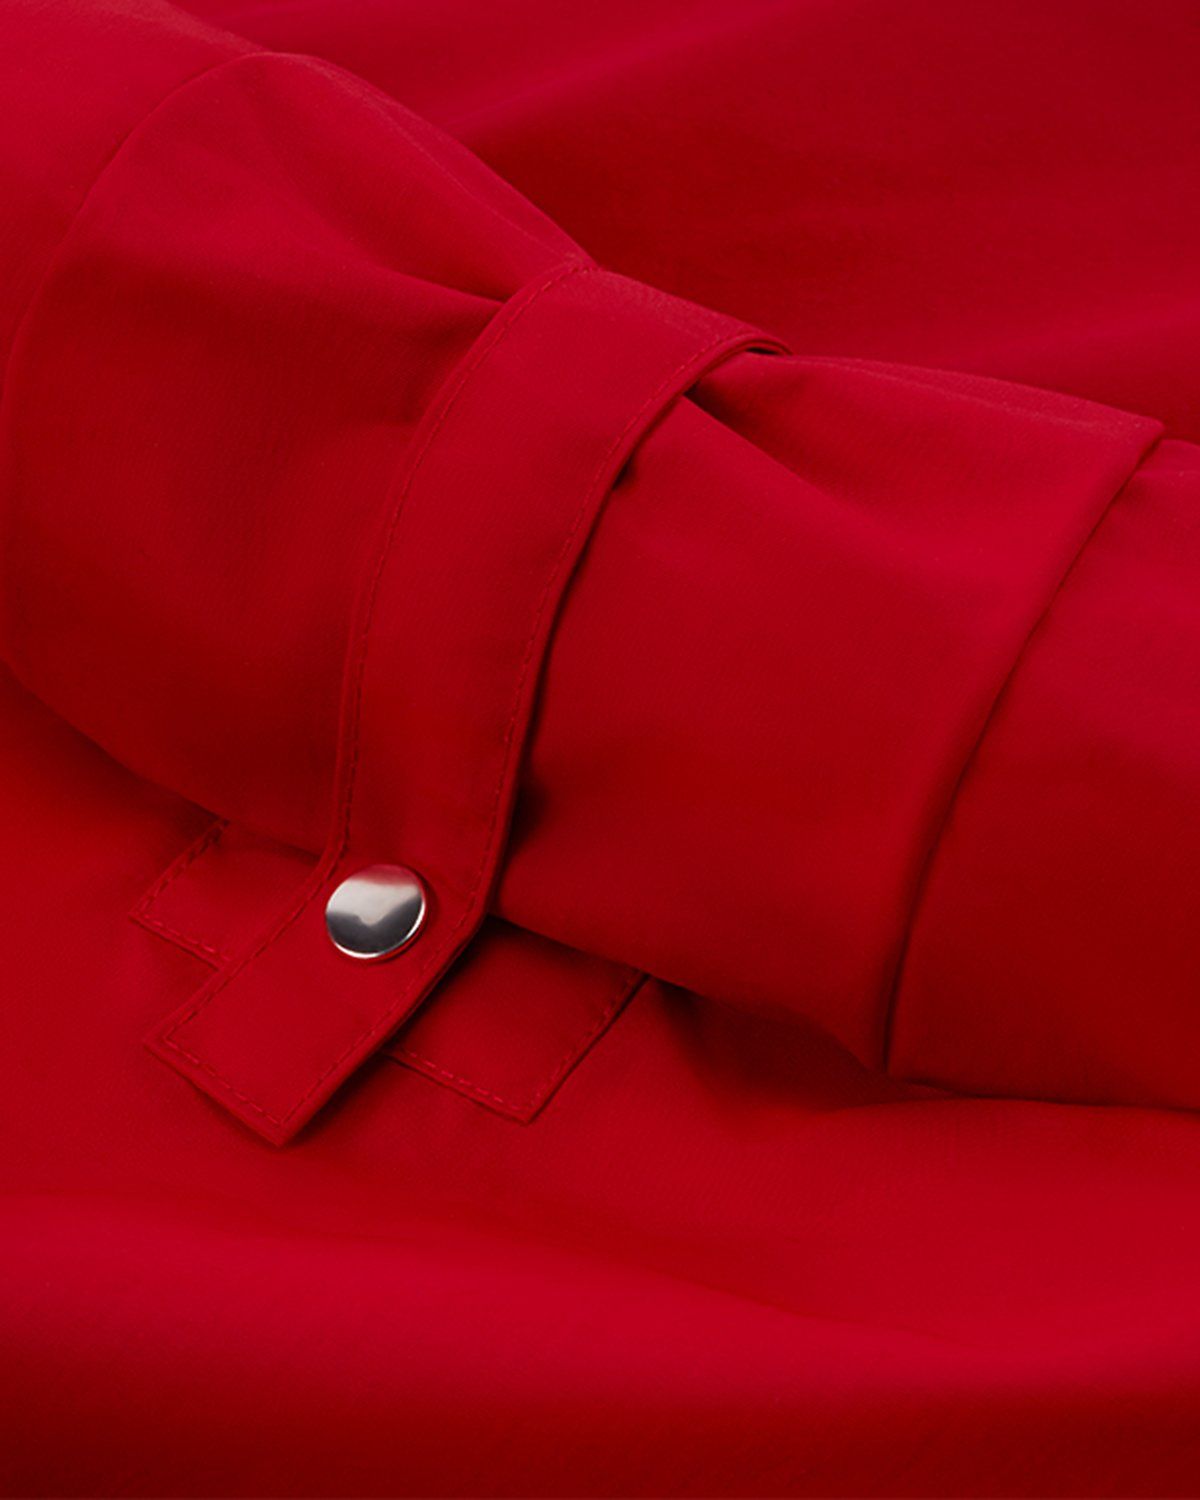 Converse x Kim Jones – Parka Enamel Red - Parka Jackets - Red - Image 6